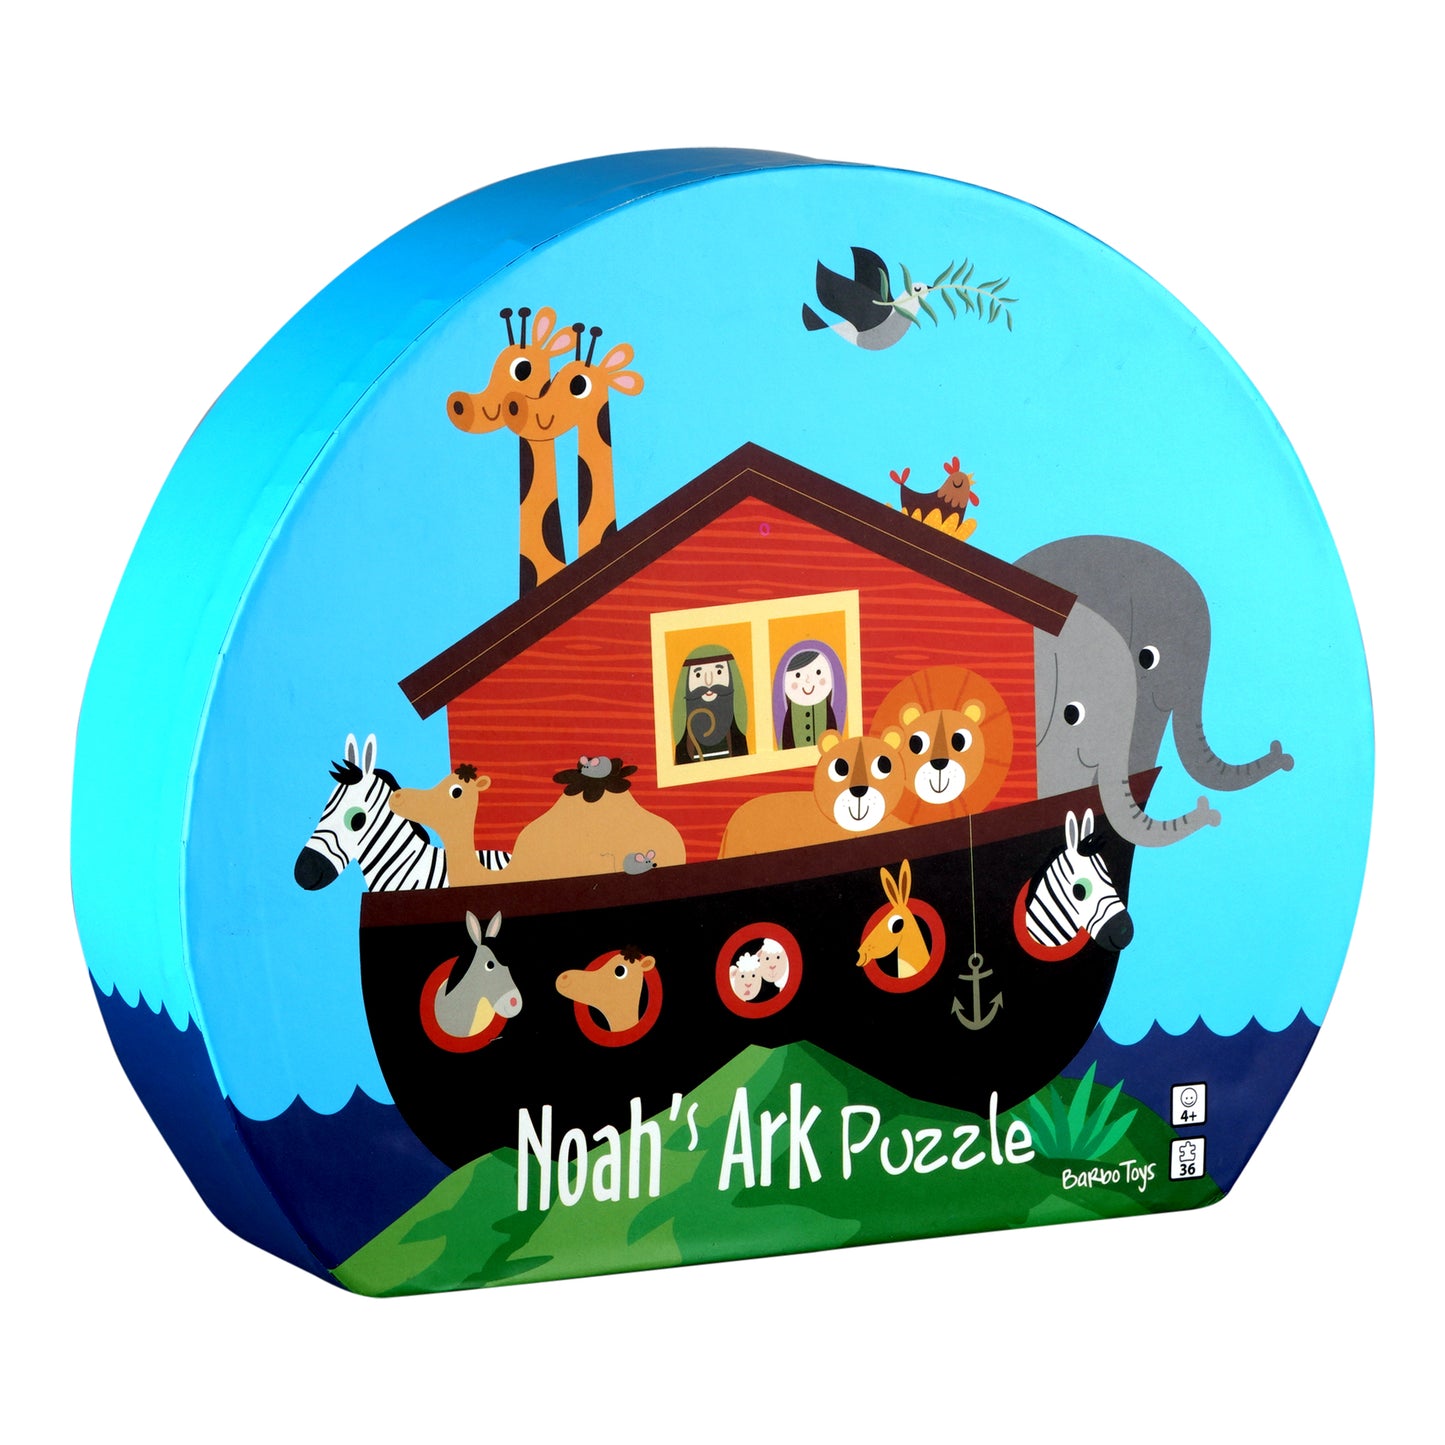 noah´s ark puzzle box game